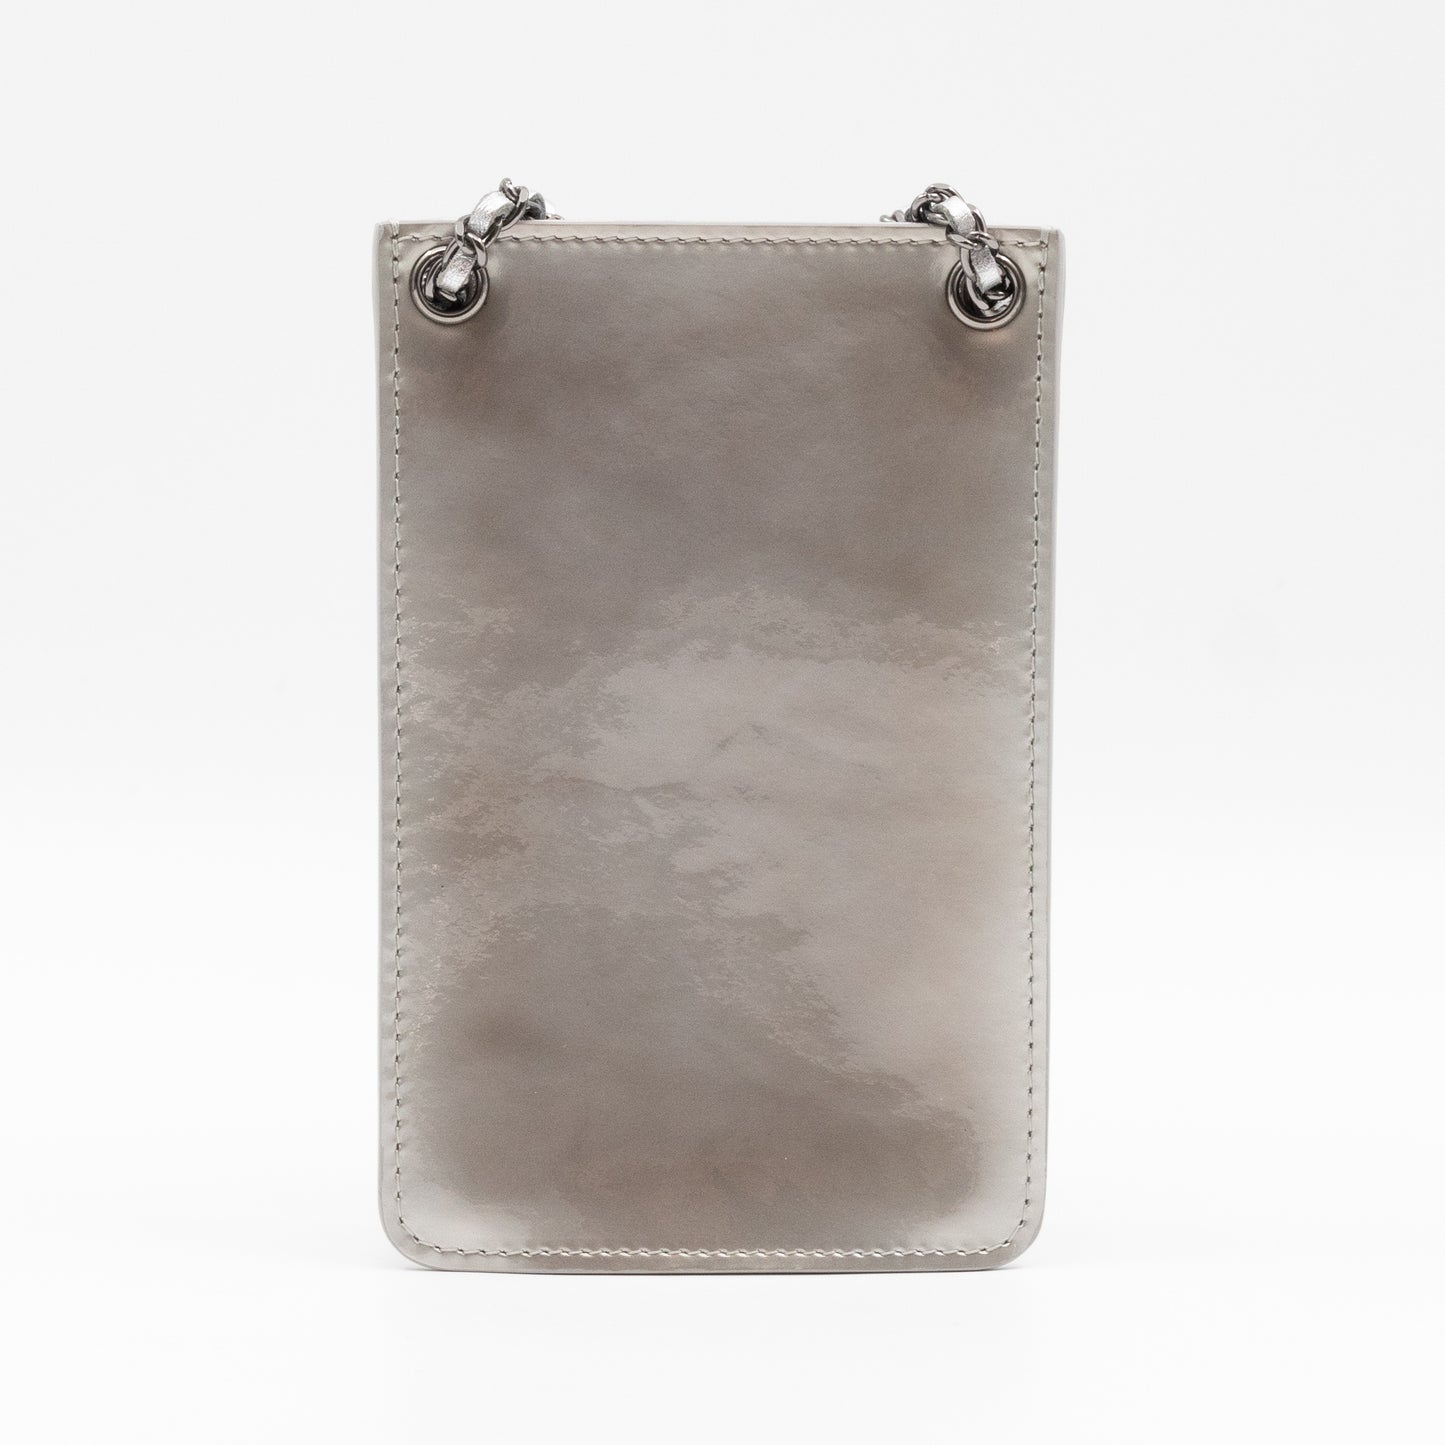 CC Phone Holder Crossbody Bag Silver Metallic Patent Leather